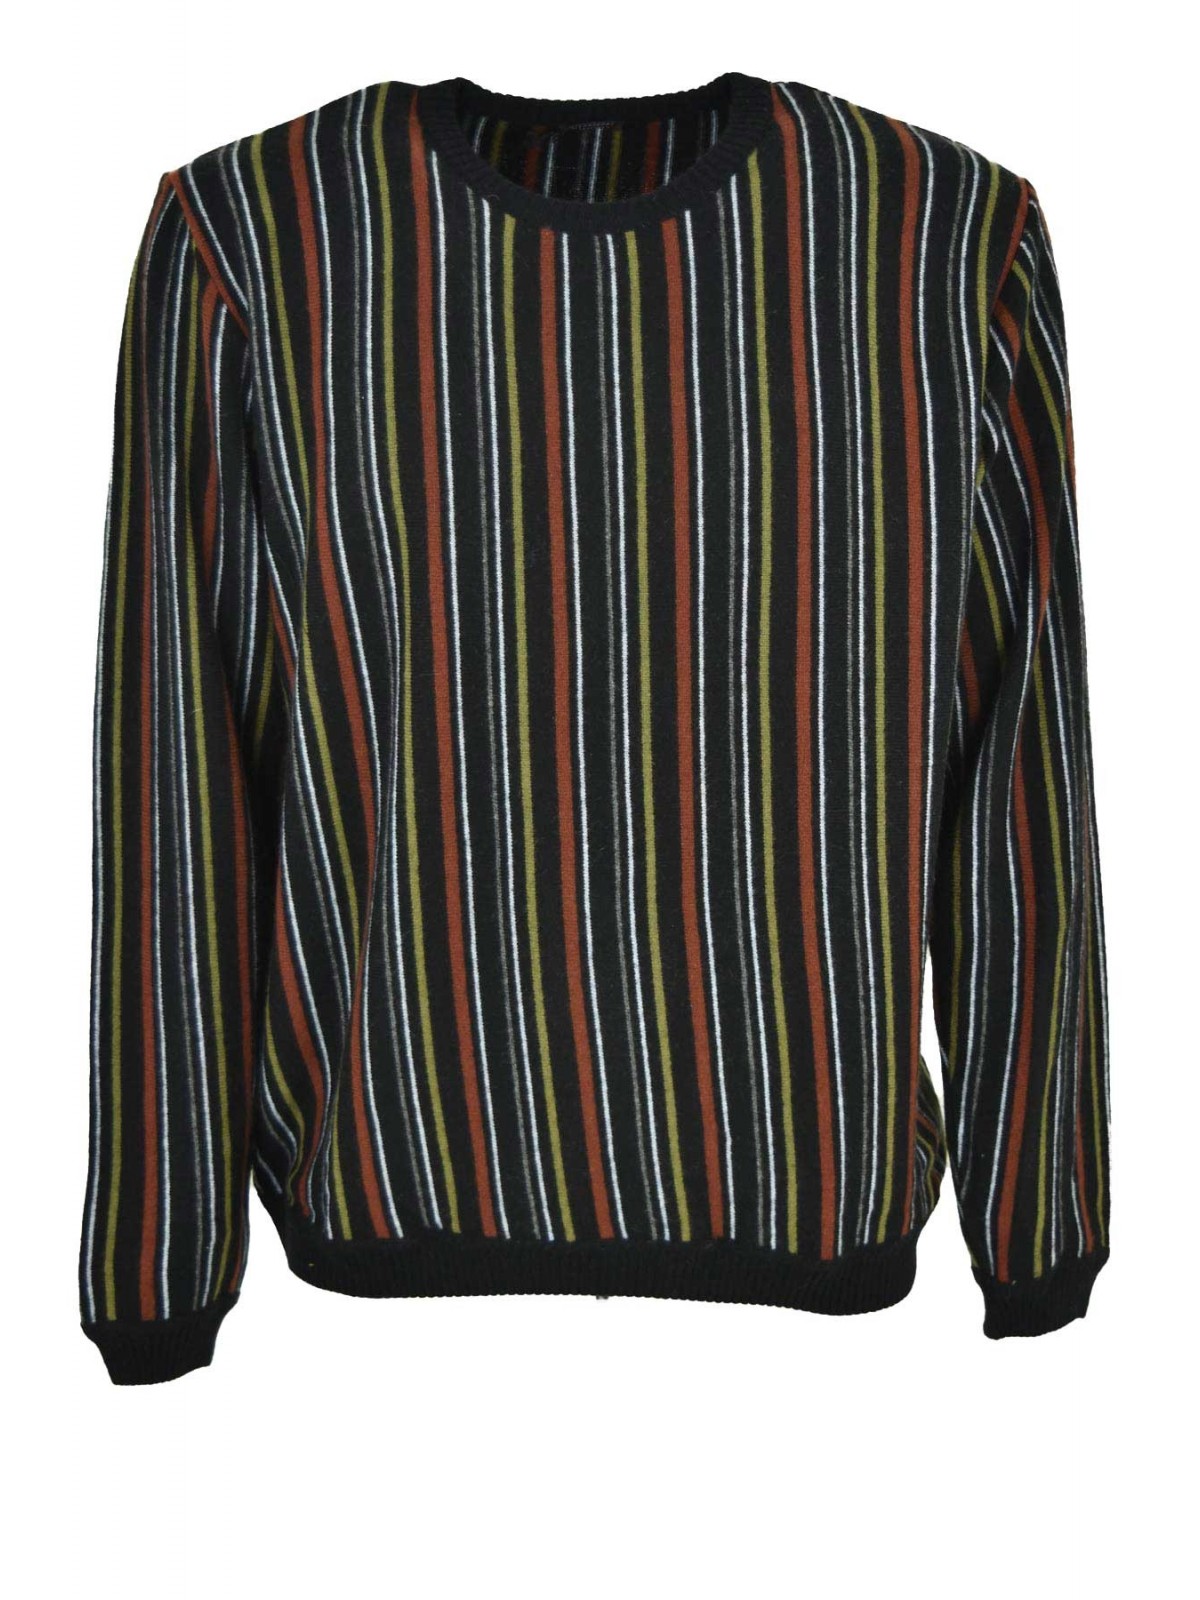 Men's Crew Neck Sweater Black Rust Green White Gray Stripes - Mixed Cashmere